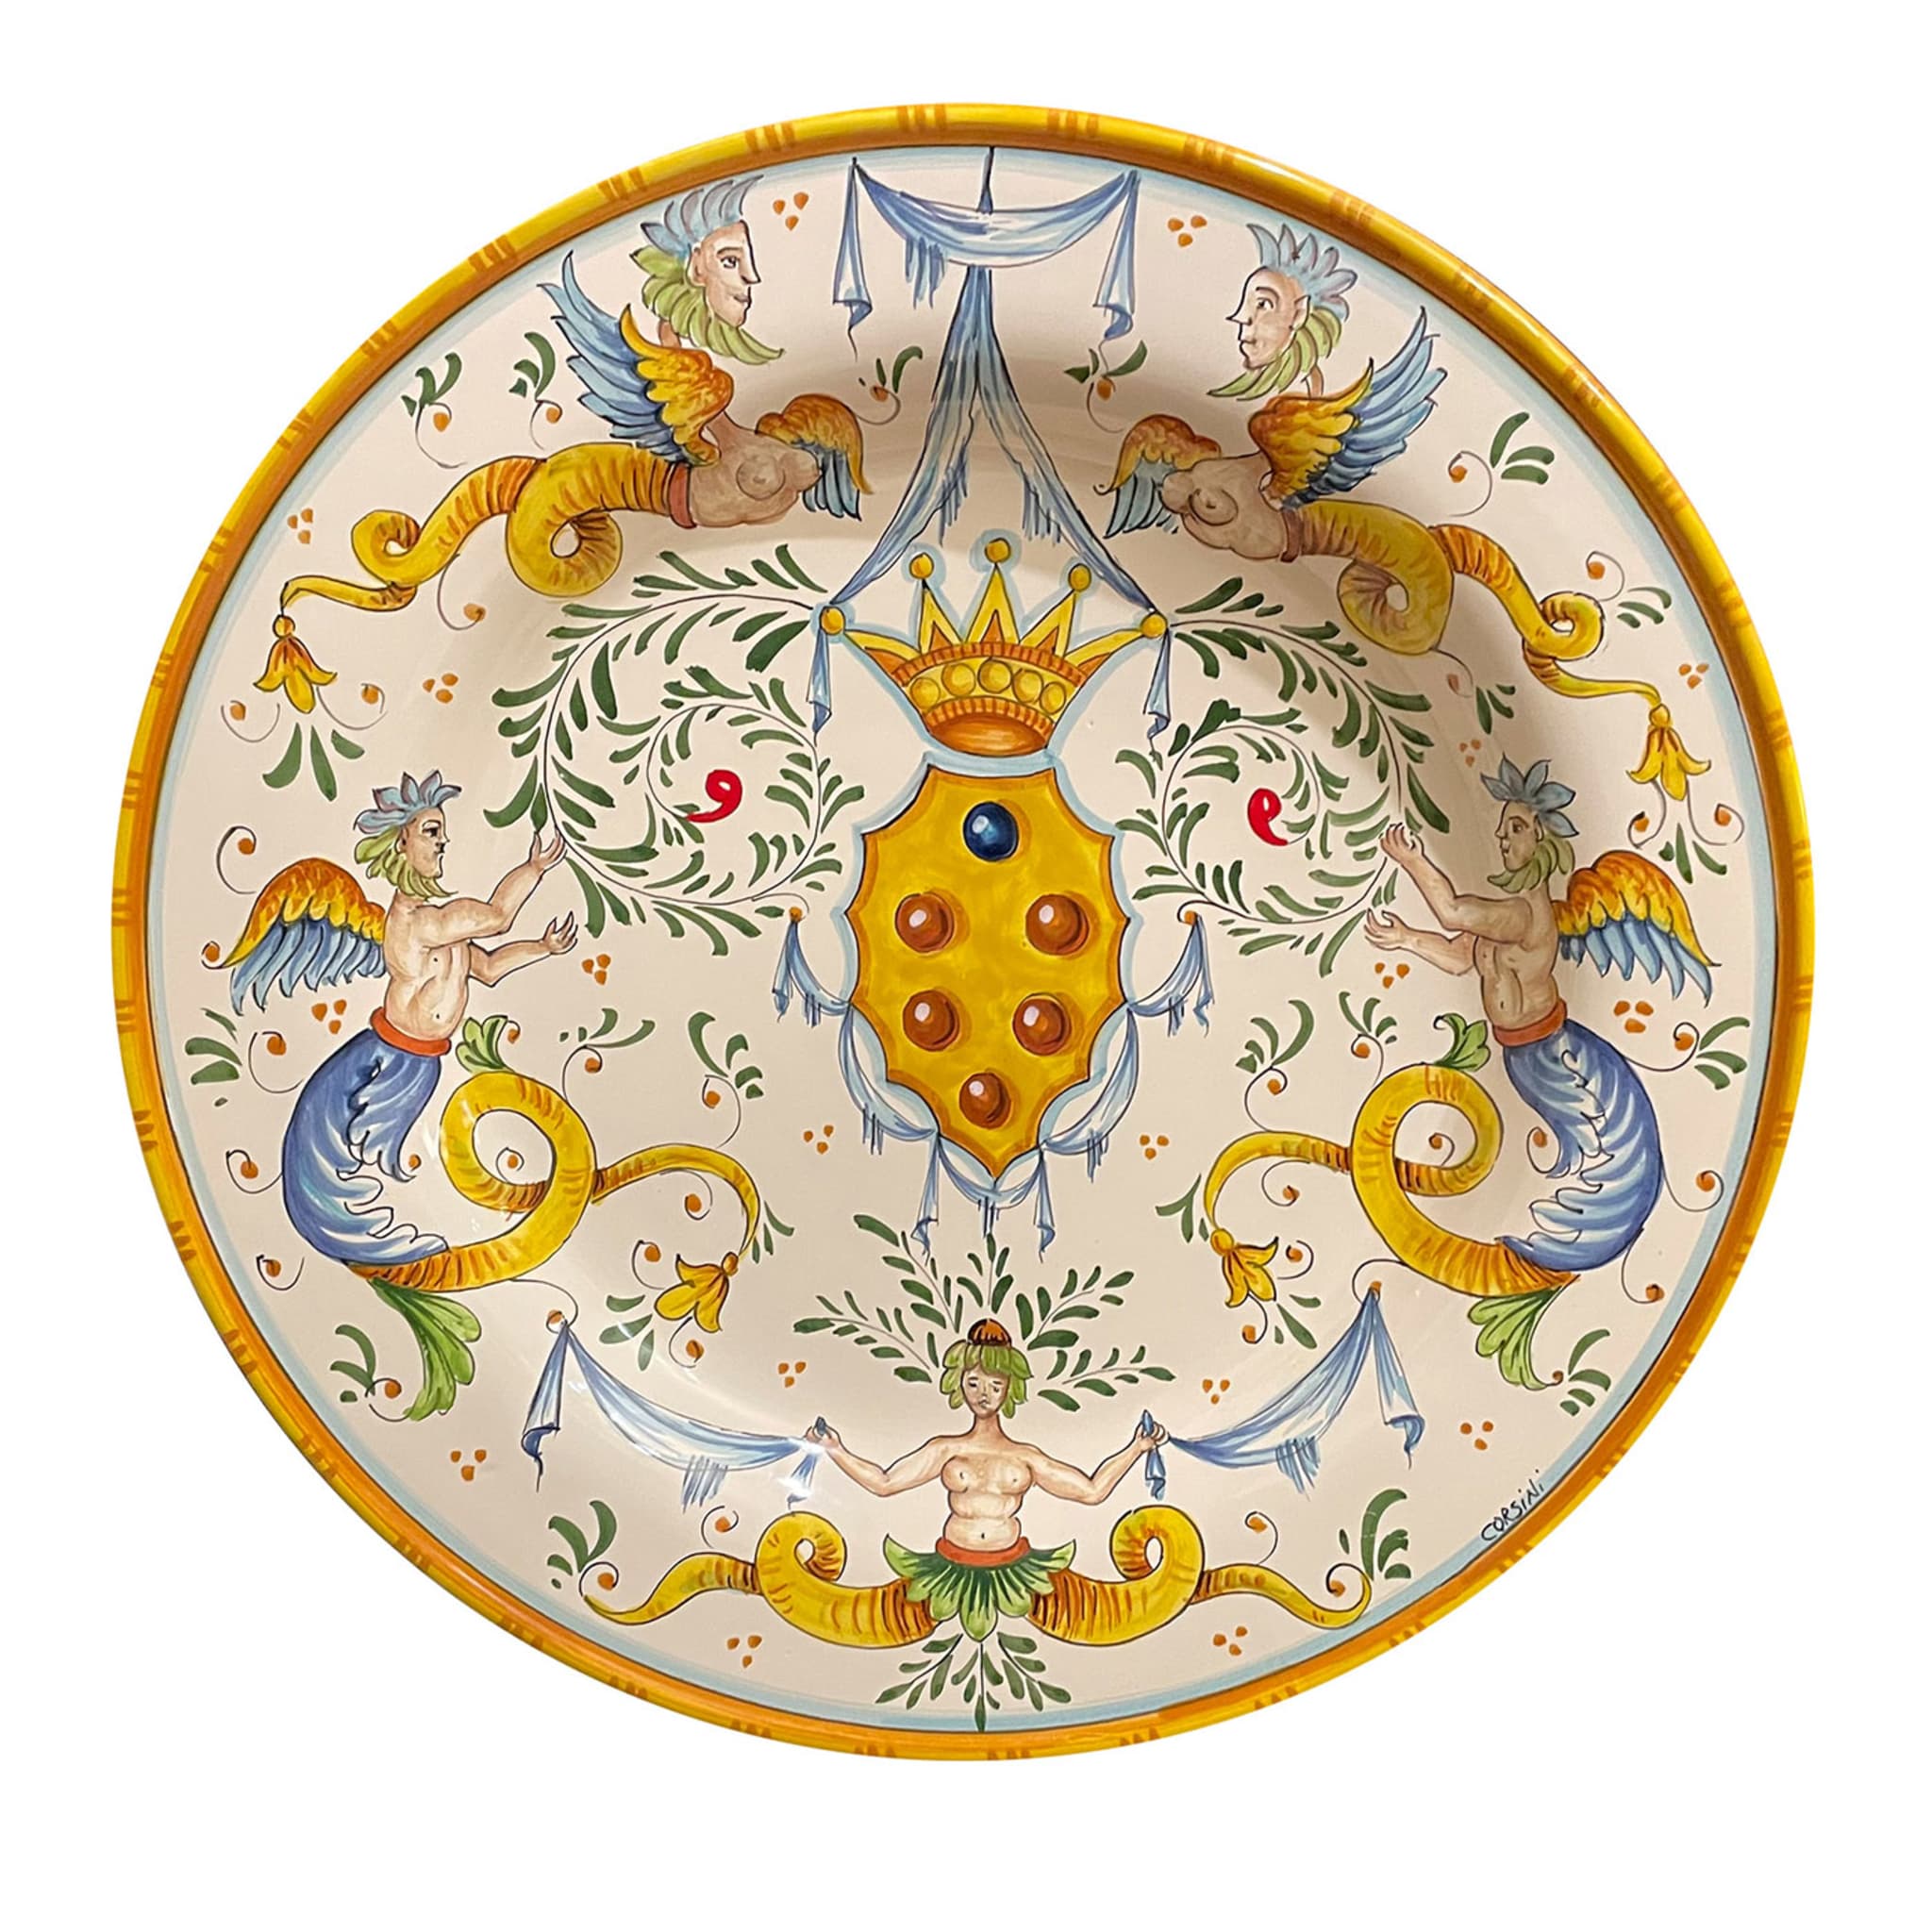 Raphaelesque-Style Polychrome Plate - Main view